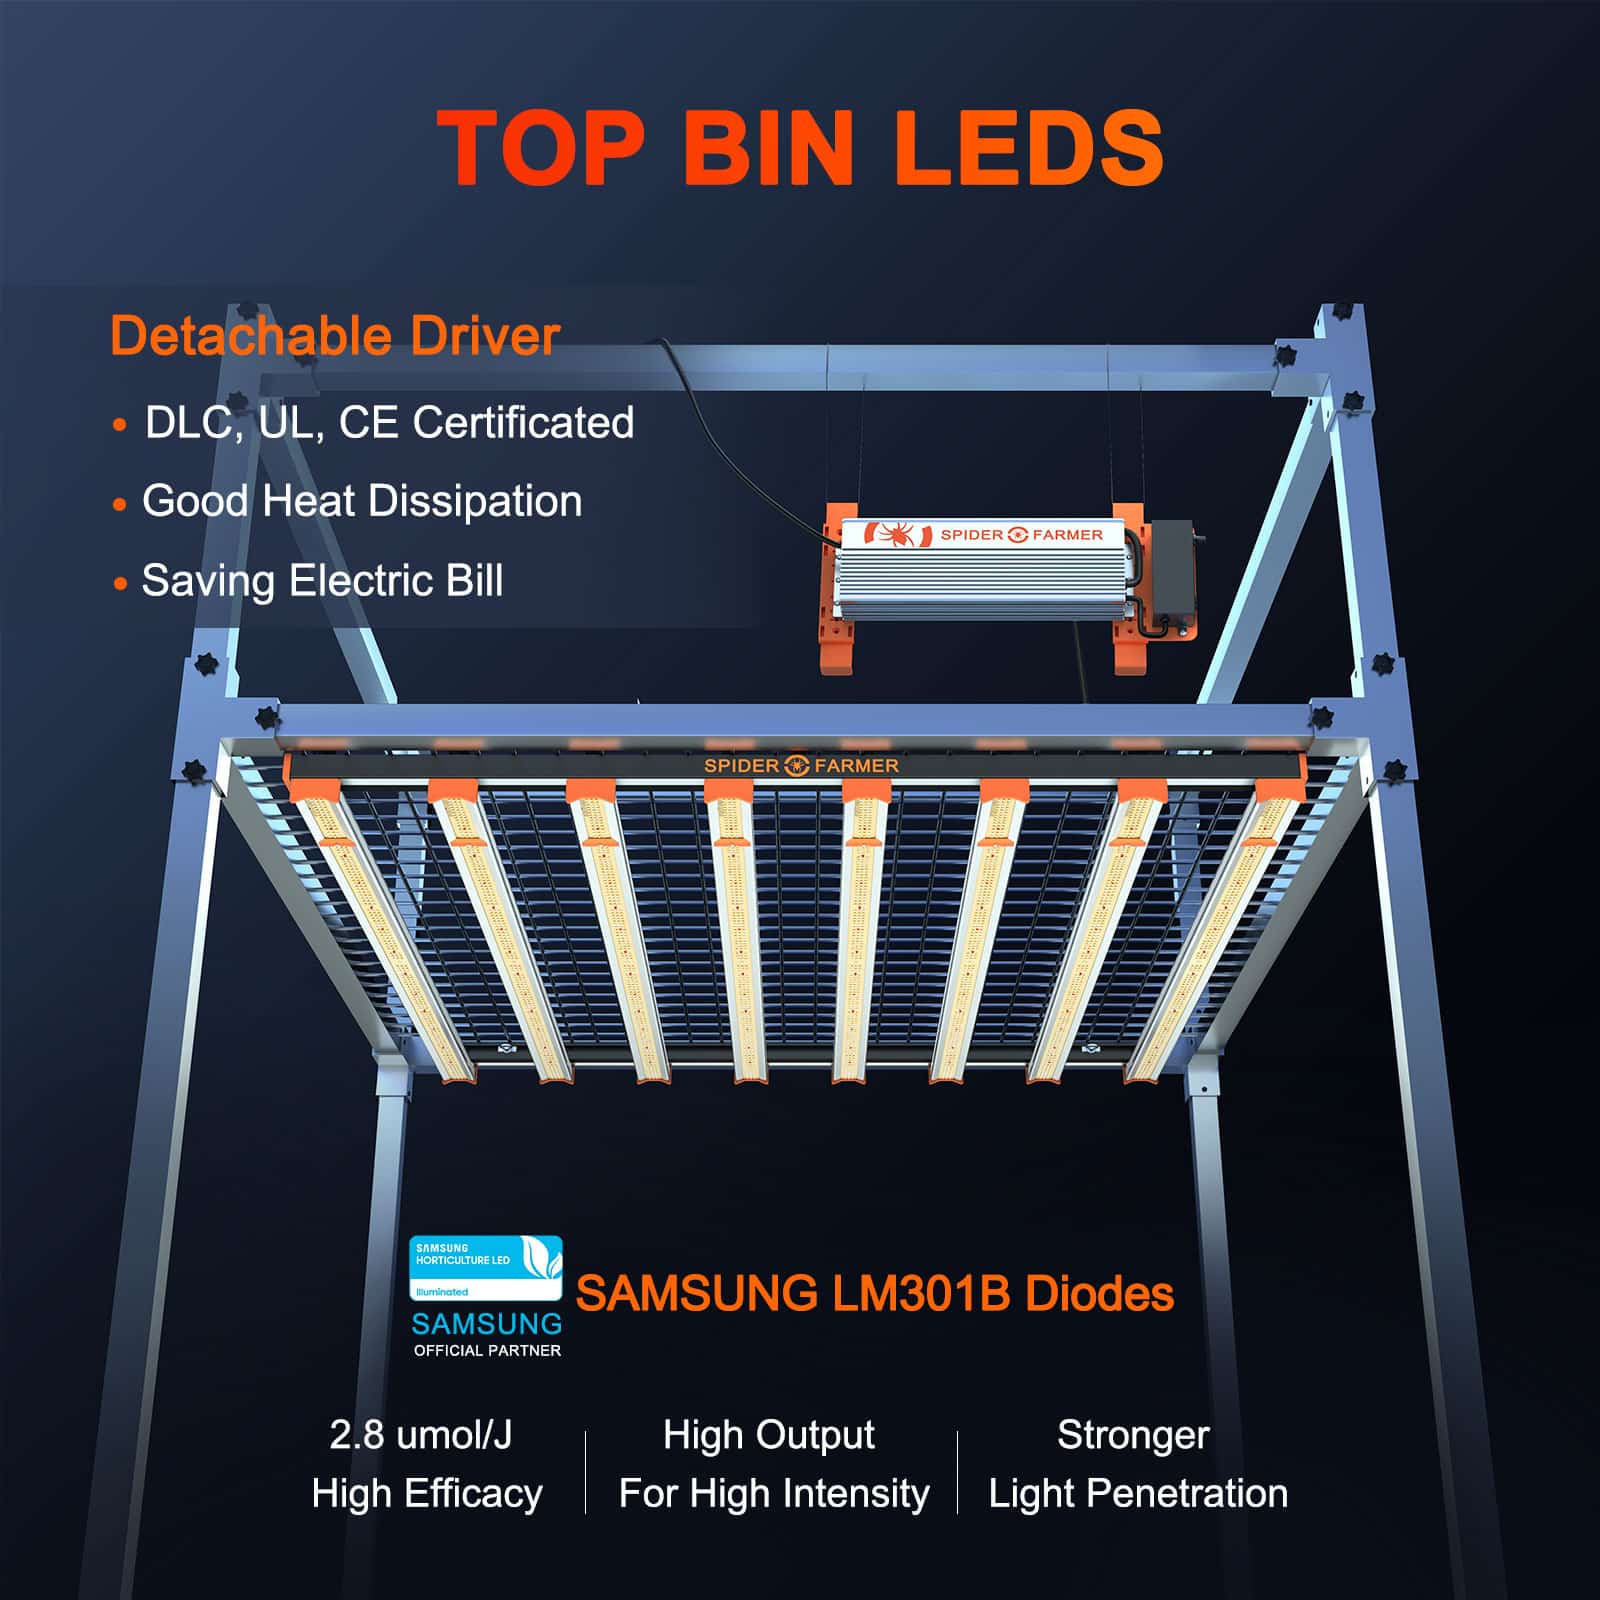 Top Bin LEDS